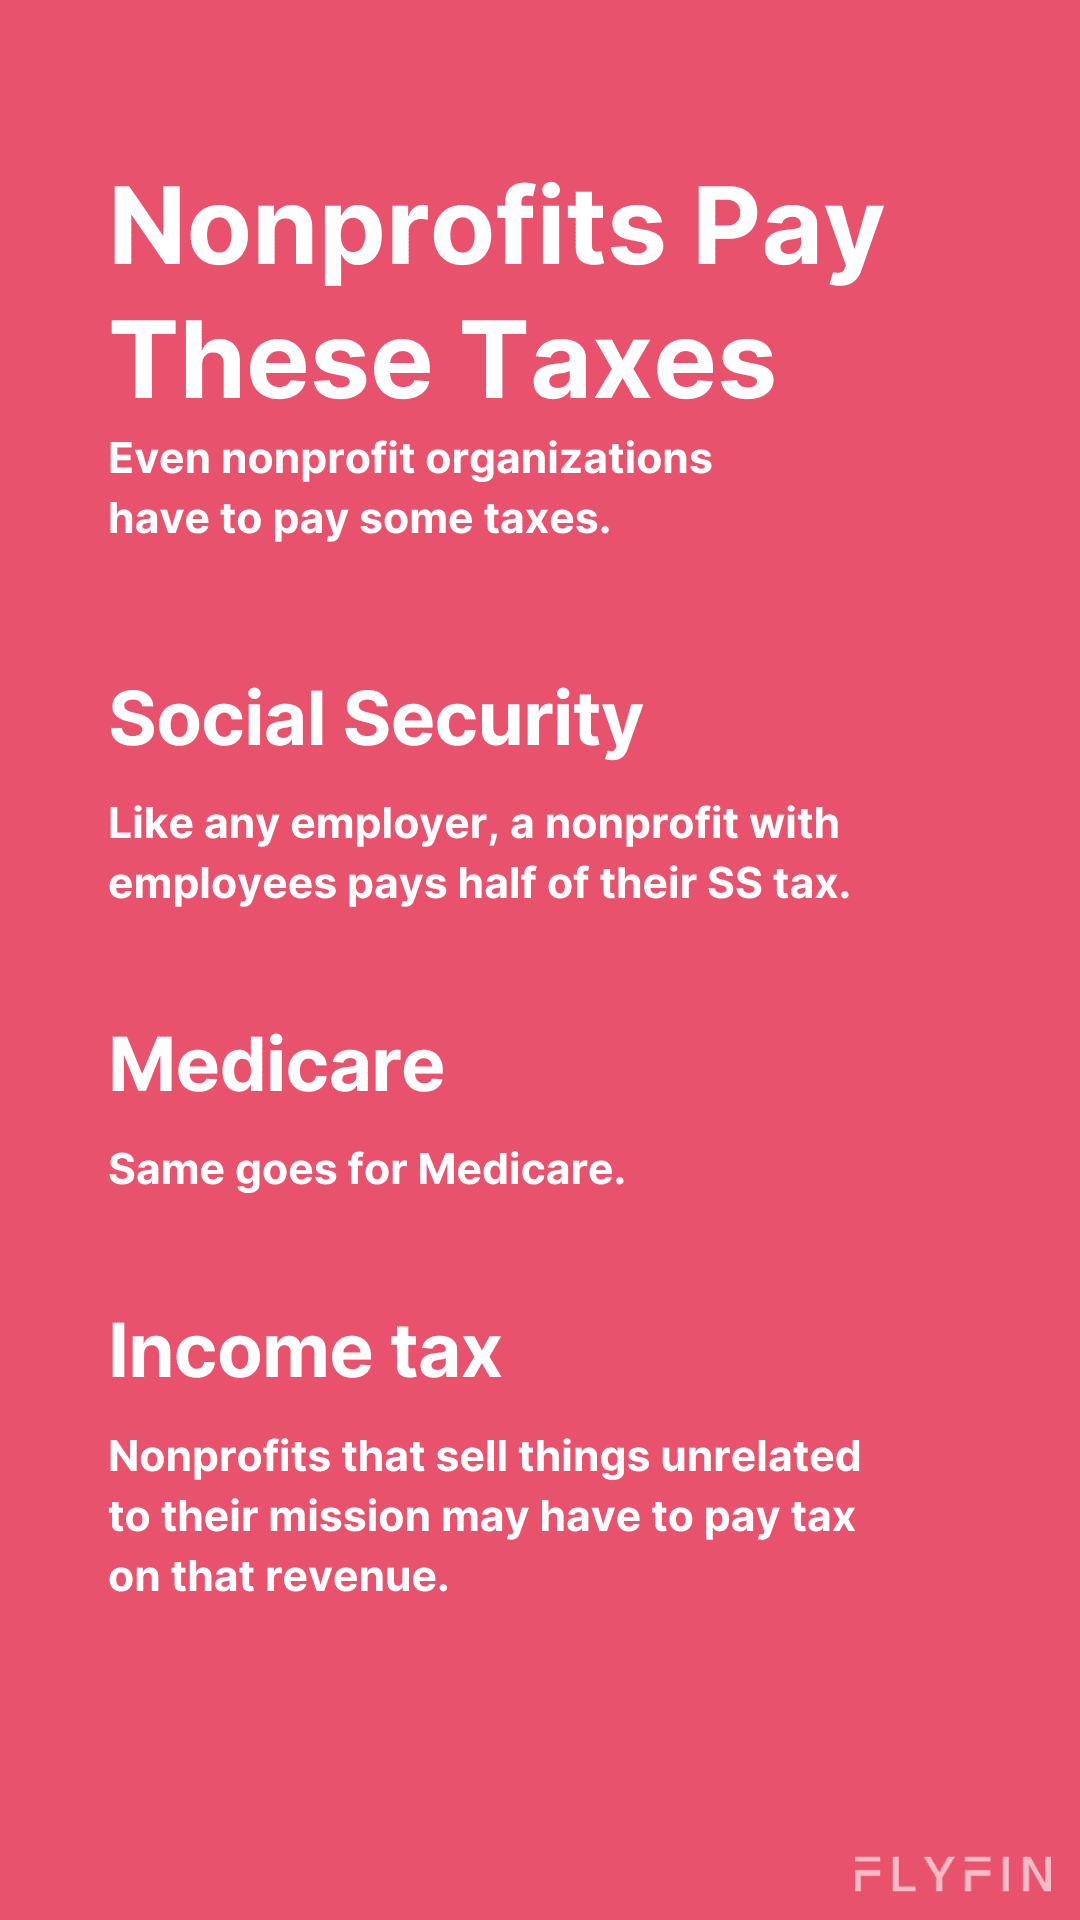 Do nonprofits pay taxes?